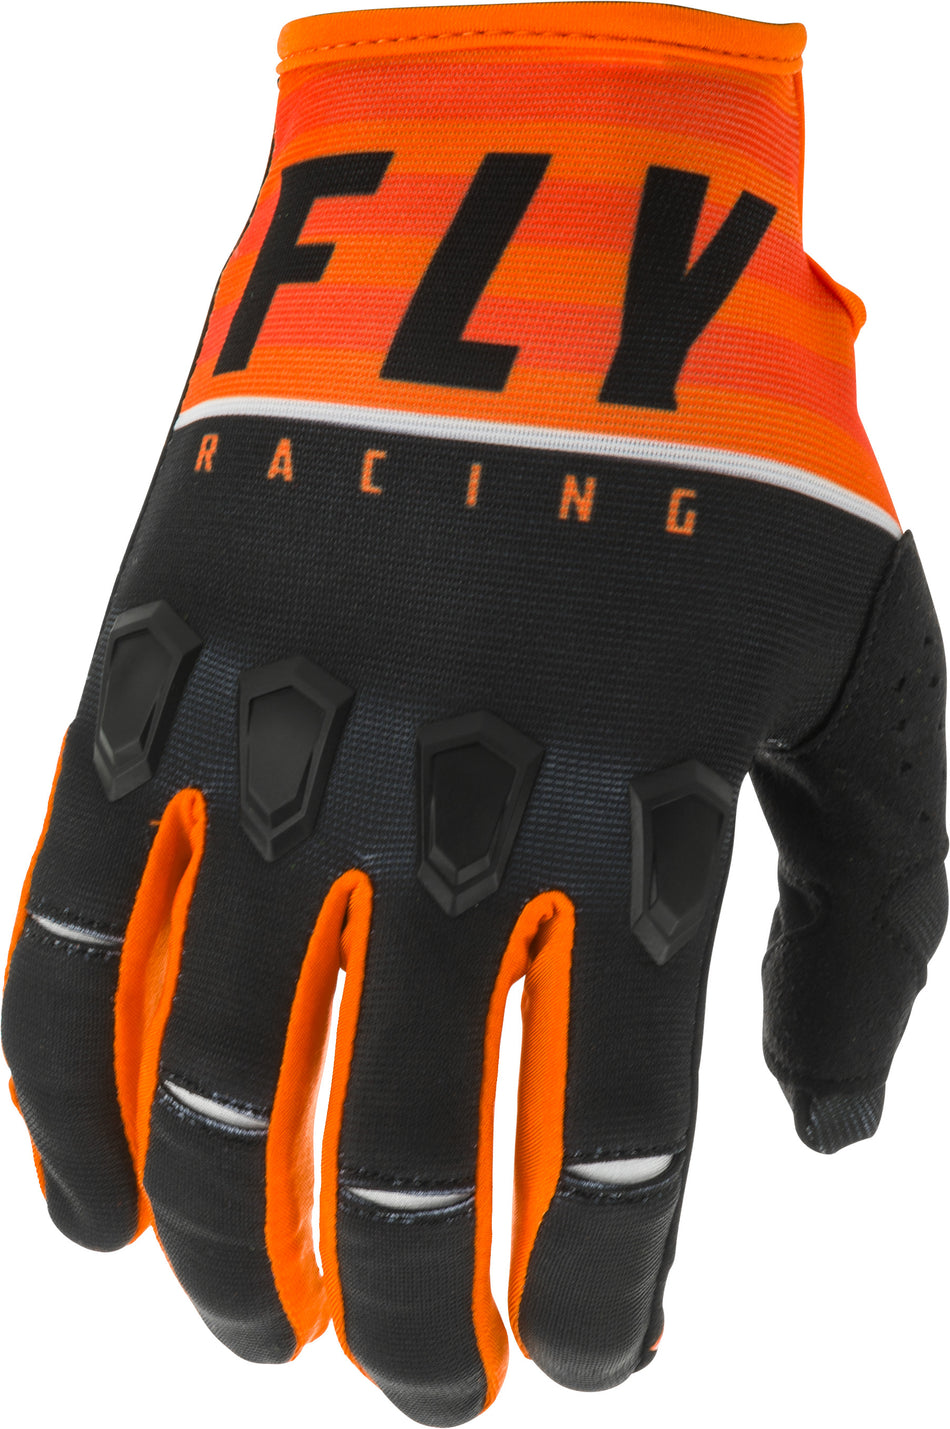 FLY RACING Kinetic K120 Gloves Orange/Black/White Sz 07 373-41707